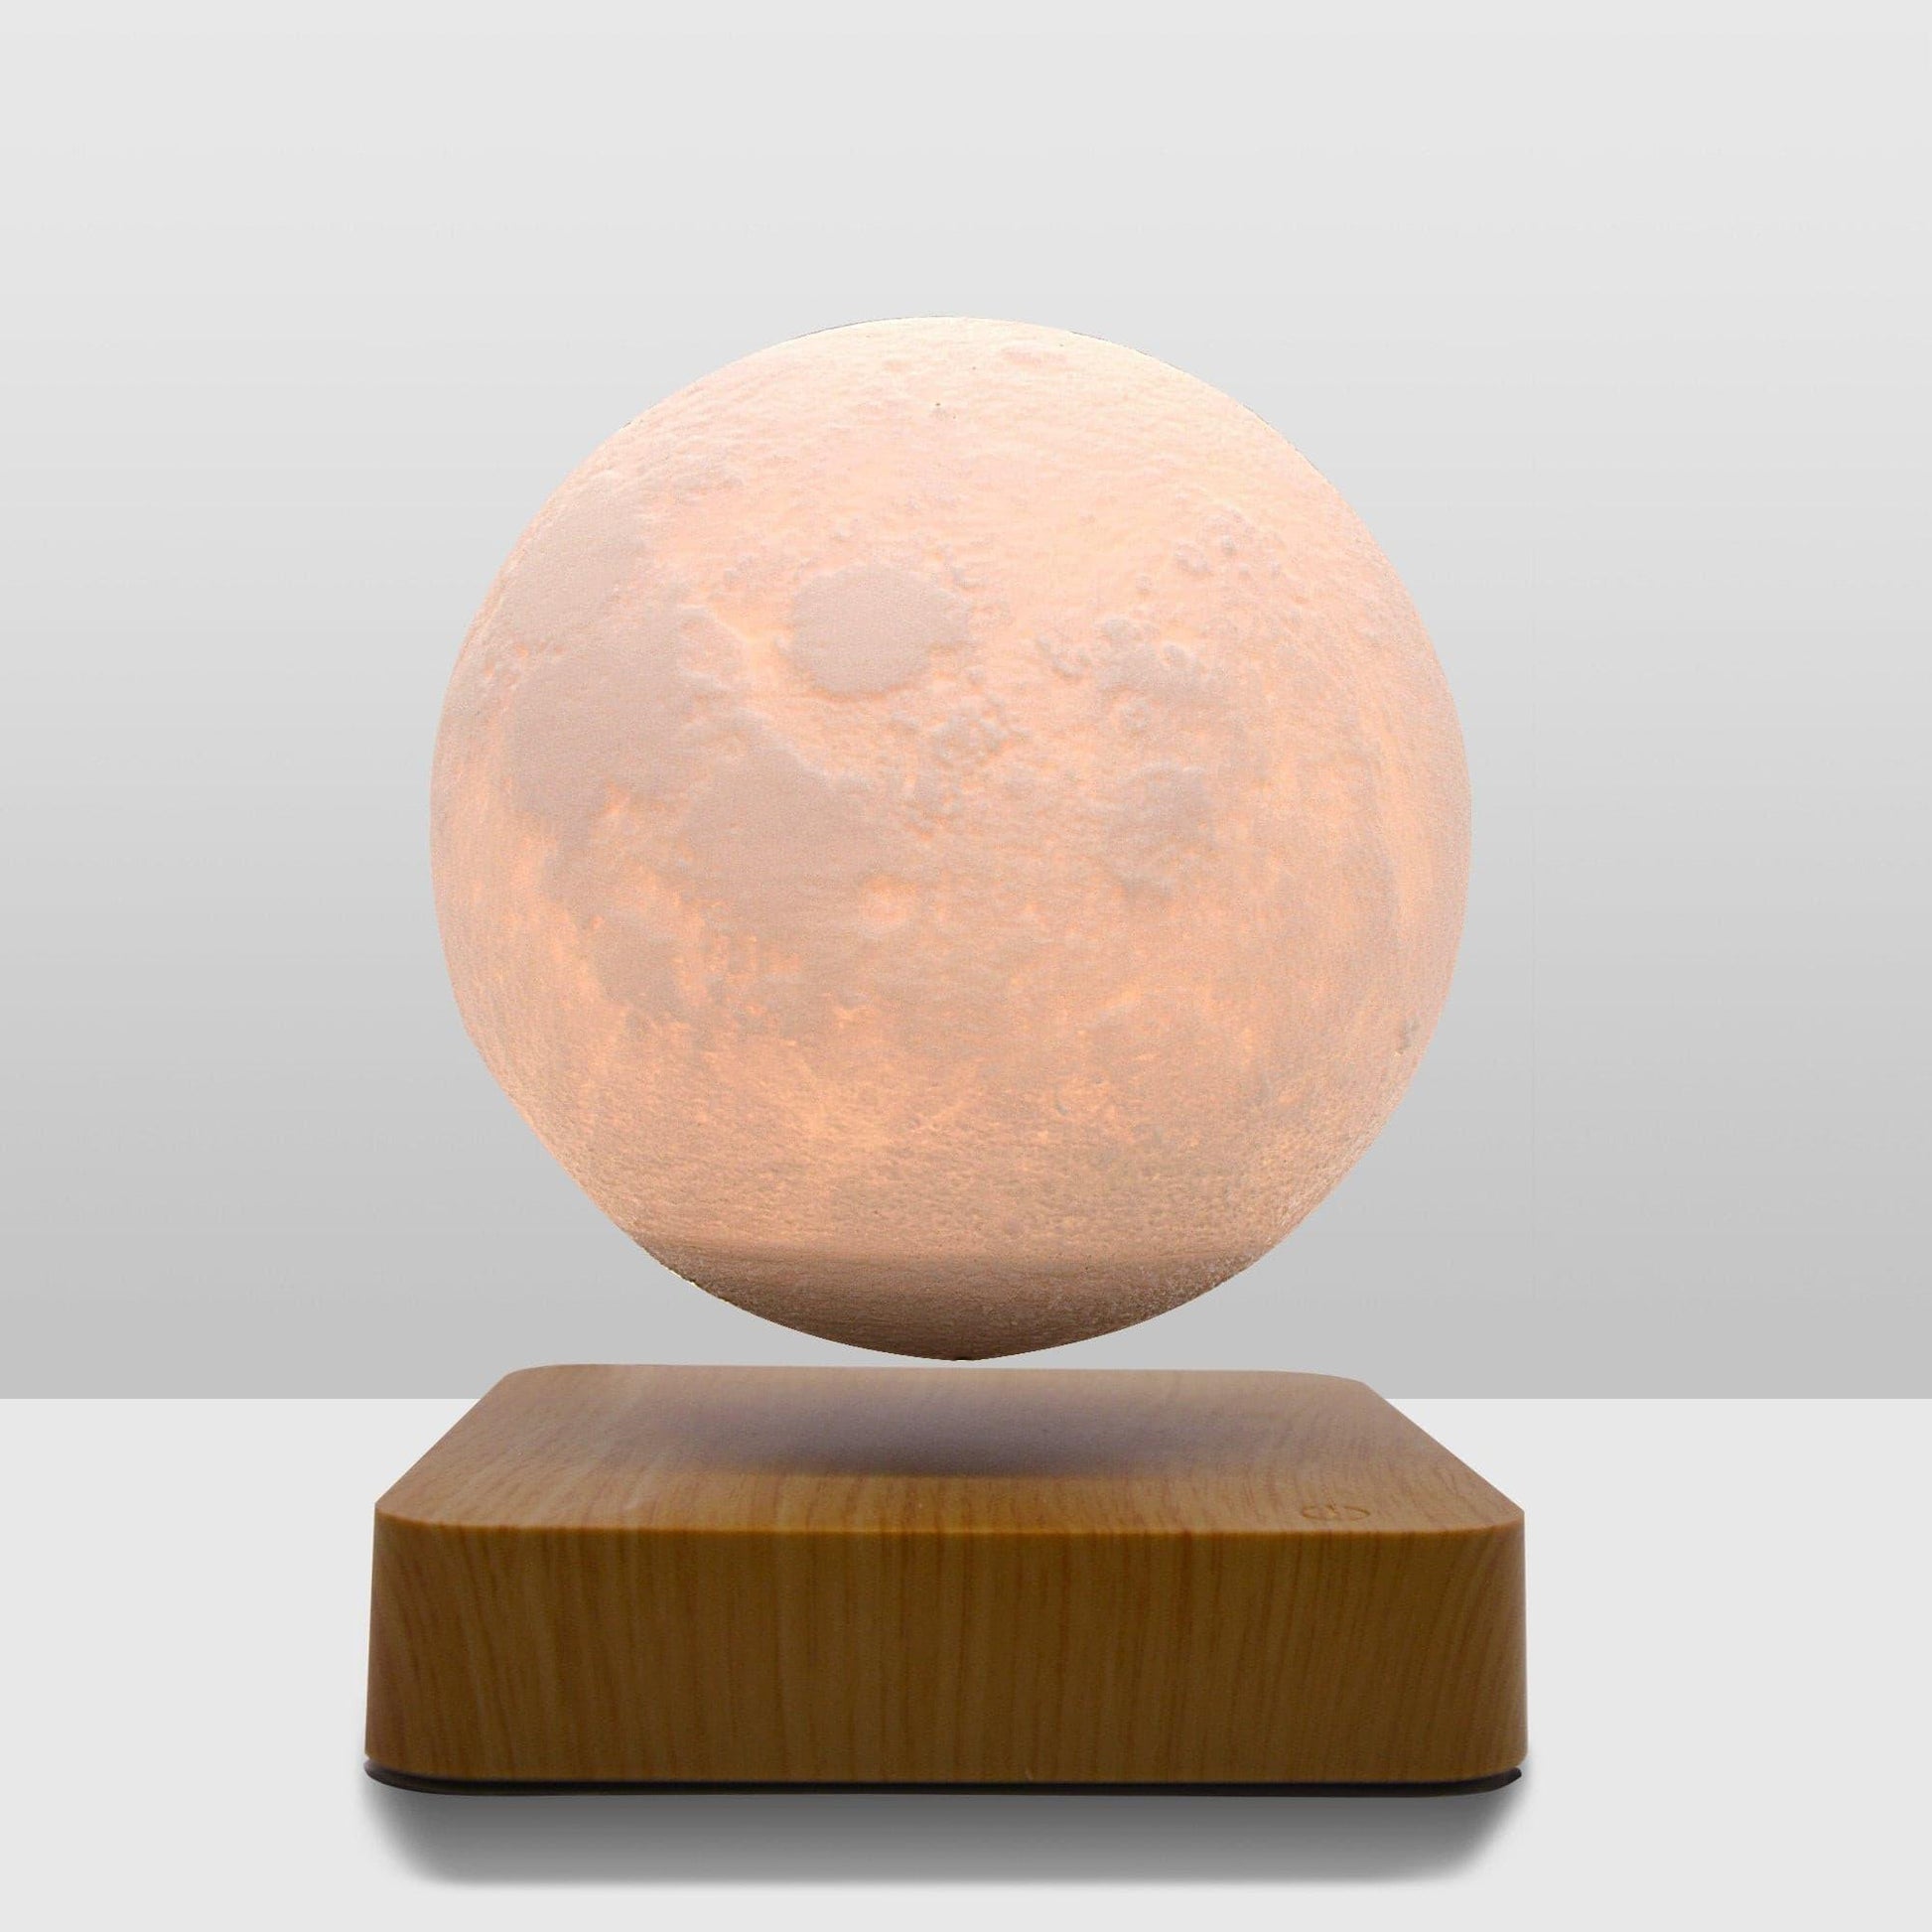 Levitation Moon Lamp, 3D Print Floating Moon - #tiktokmademebuyit